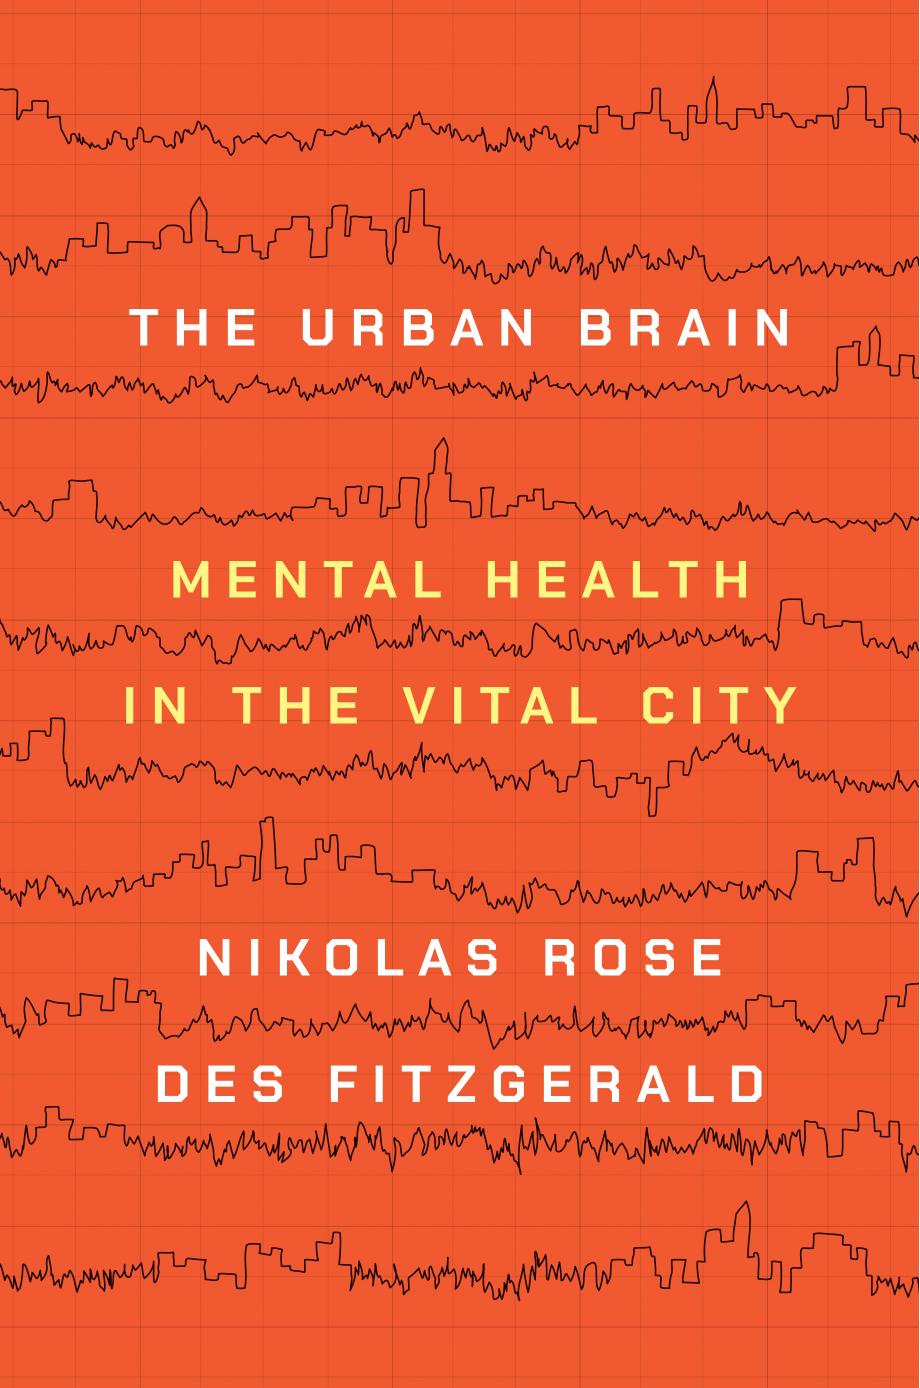 The Urban Brain by Nikolas Rose and Des Fitzgerald